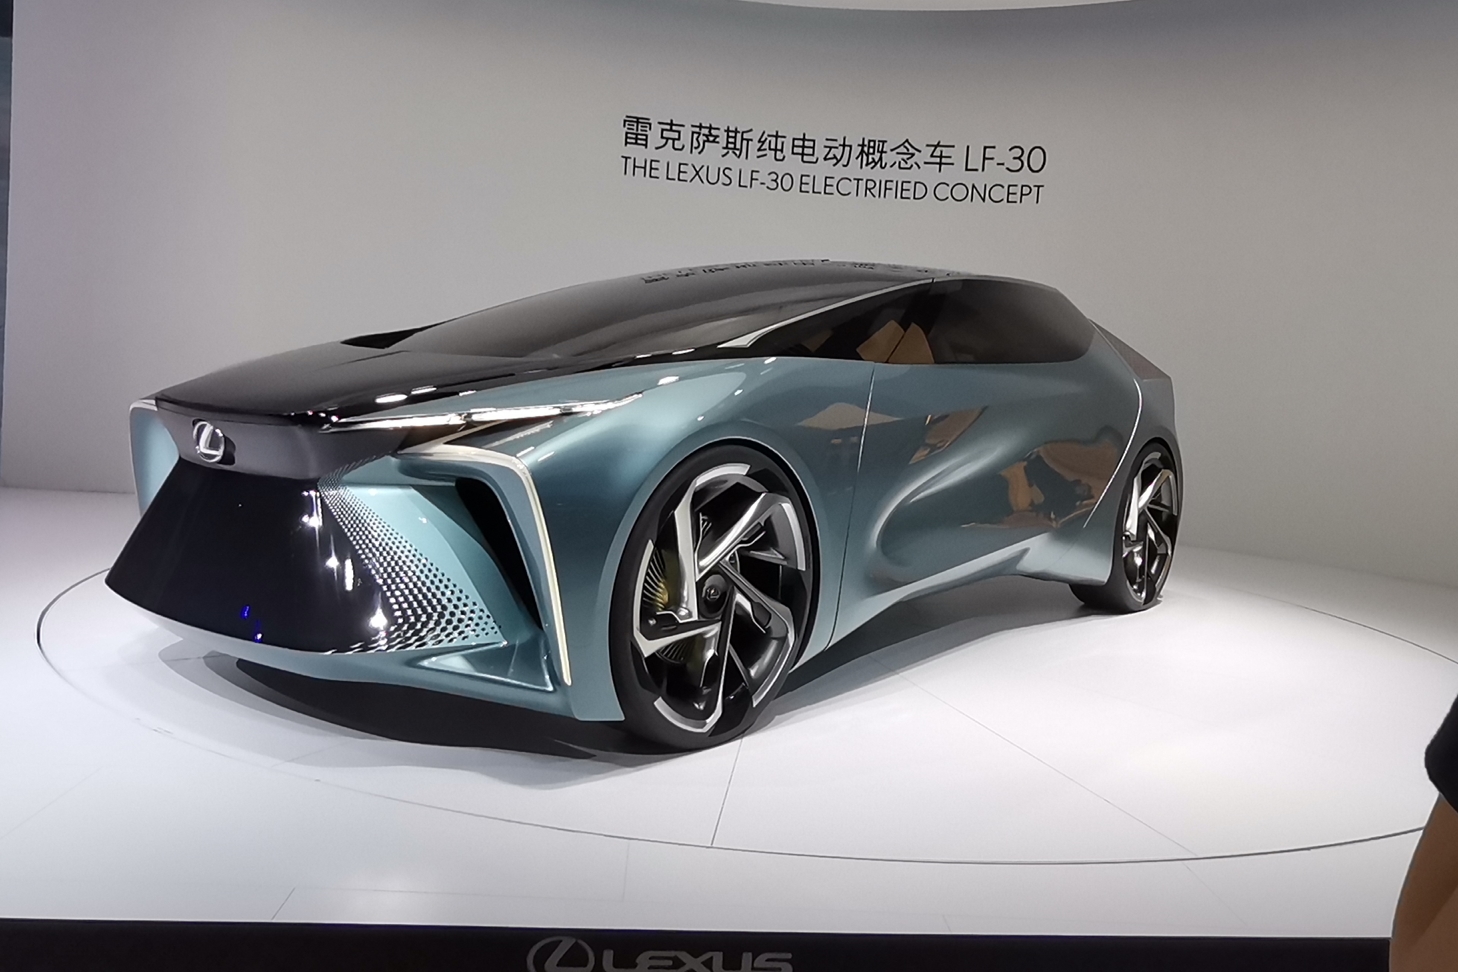 LEXUS雷克萨斯纯电动概念车LF-30于北京国际车展首秀